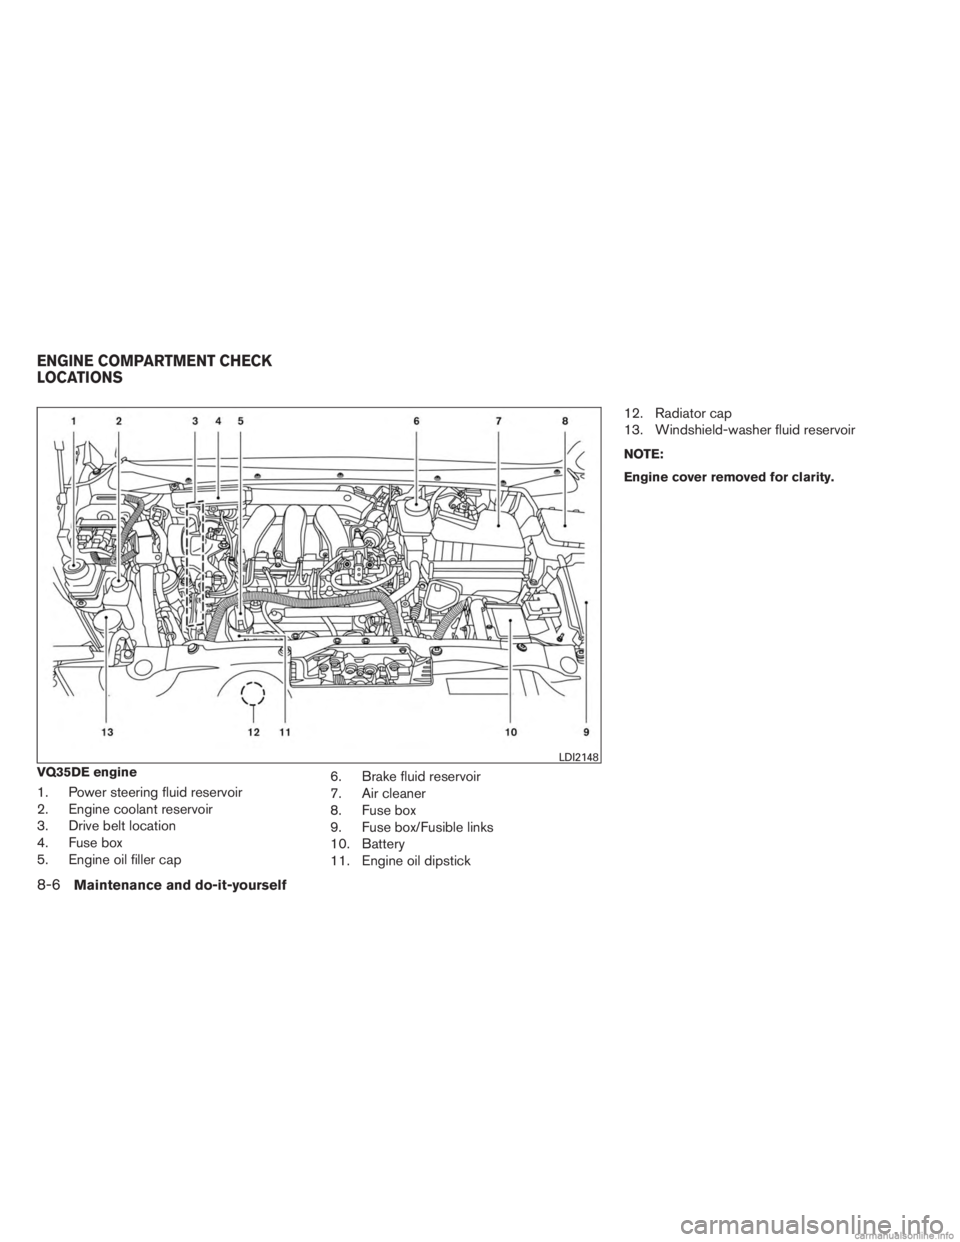 INFINITI JX 2013  Owners Manual VQ35DE engine
1. Power steering fluid reservoir
2. Engine coolant reservoir
3. Drive belt location
4. Fuse box
5. Engine oil filler cap6. Brake fluid reservoir
7. Air cleaner
8. Fuse box
9. Fuse box/F